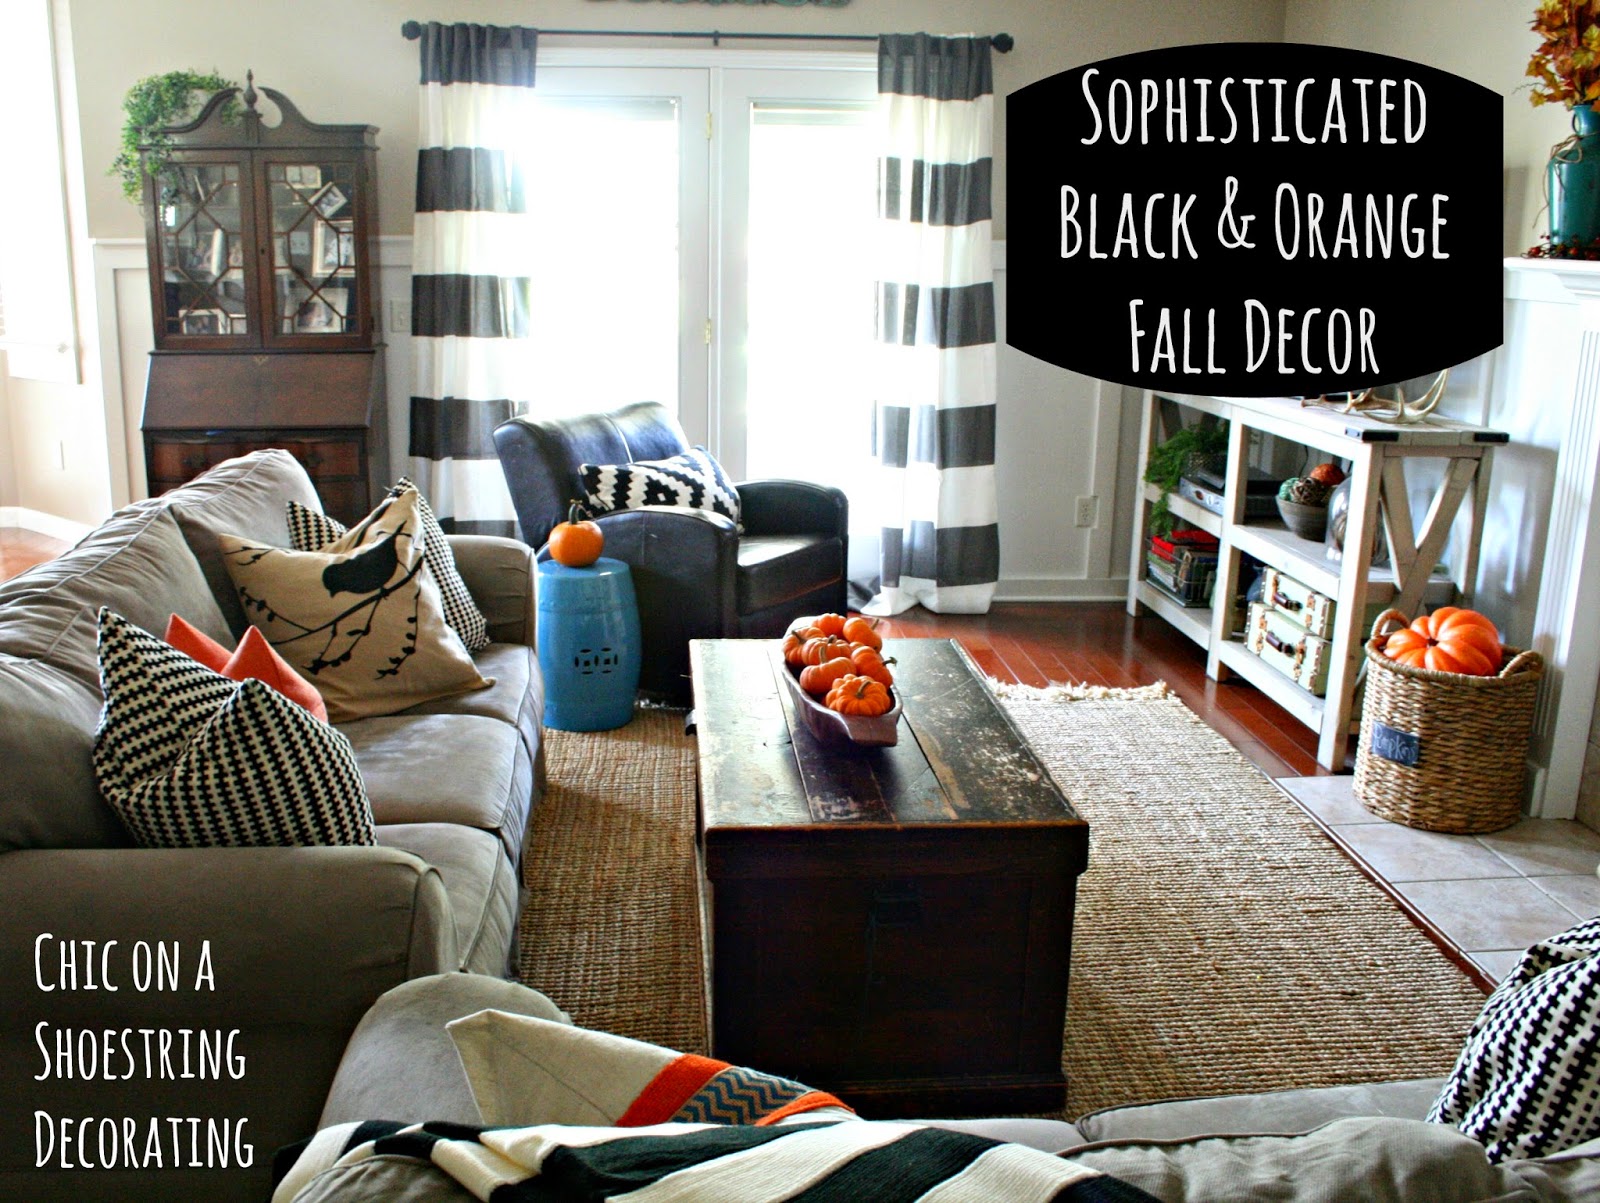 Black & Orange Fall decor at Chic on a Shoestring Decorating blog.